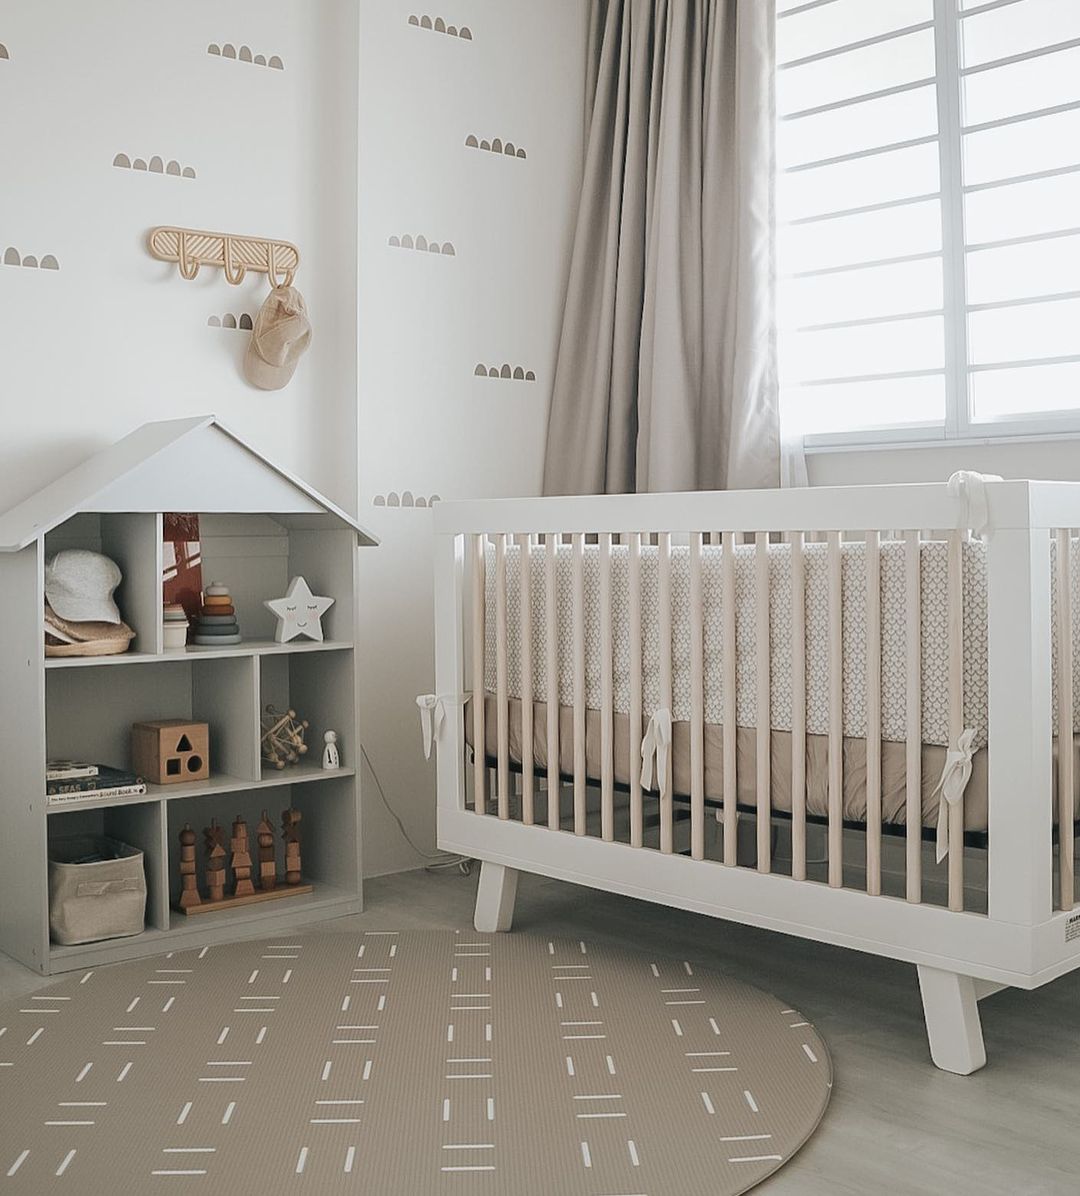 nursery inspo with crib and decor